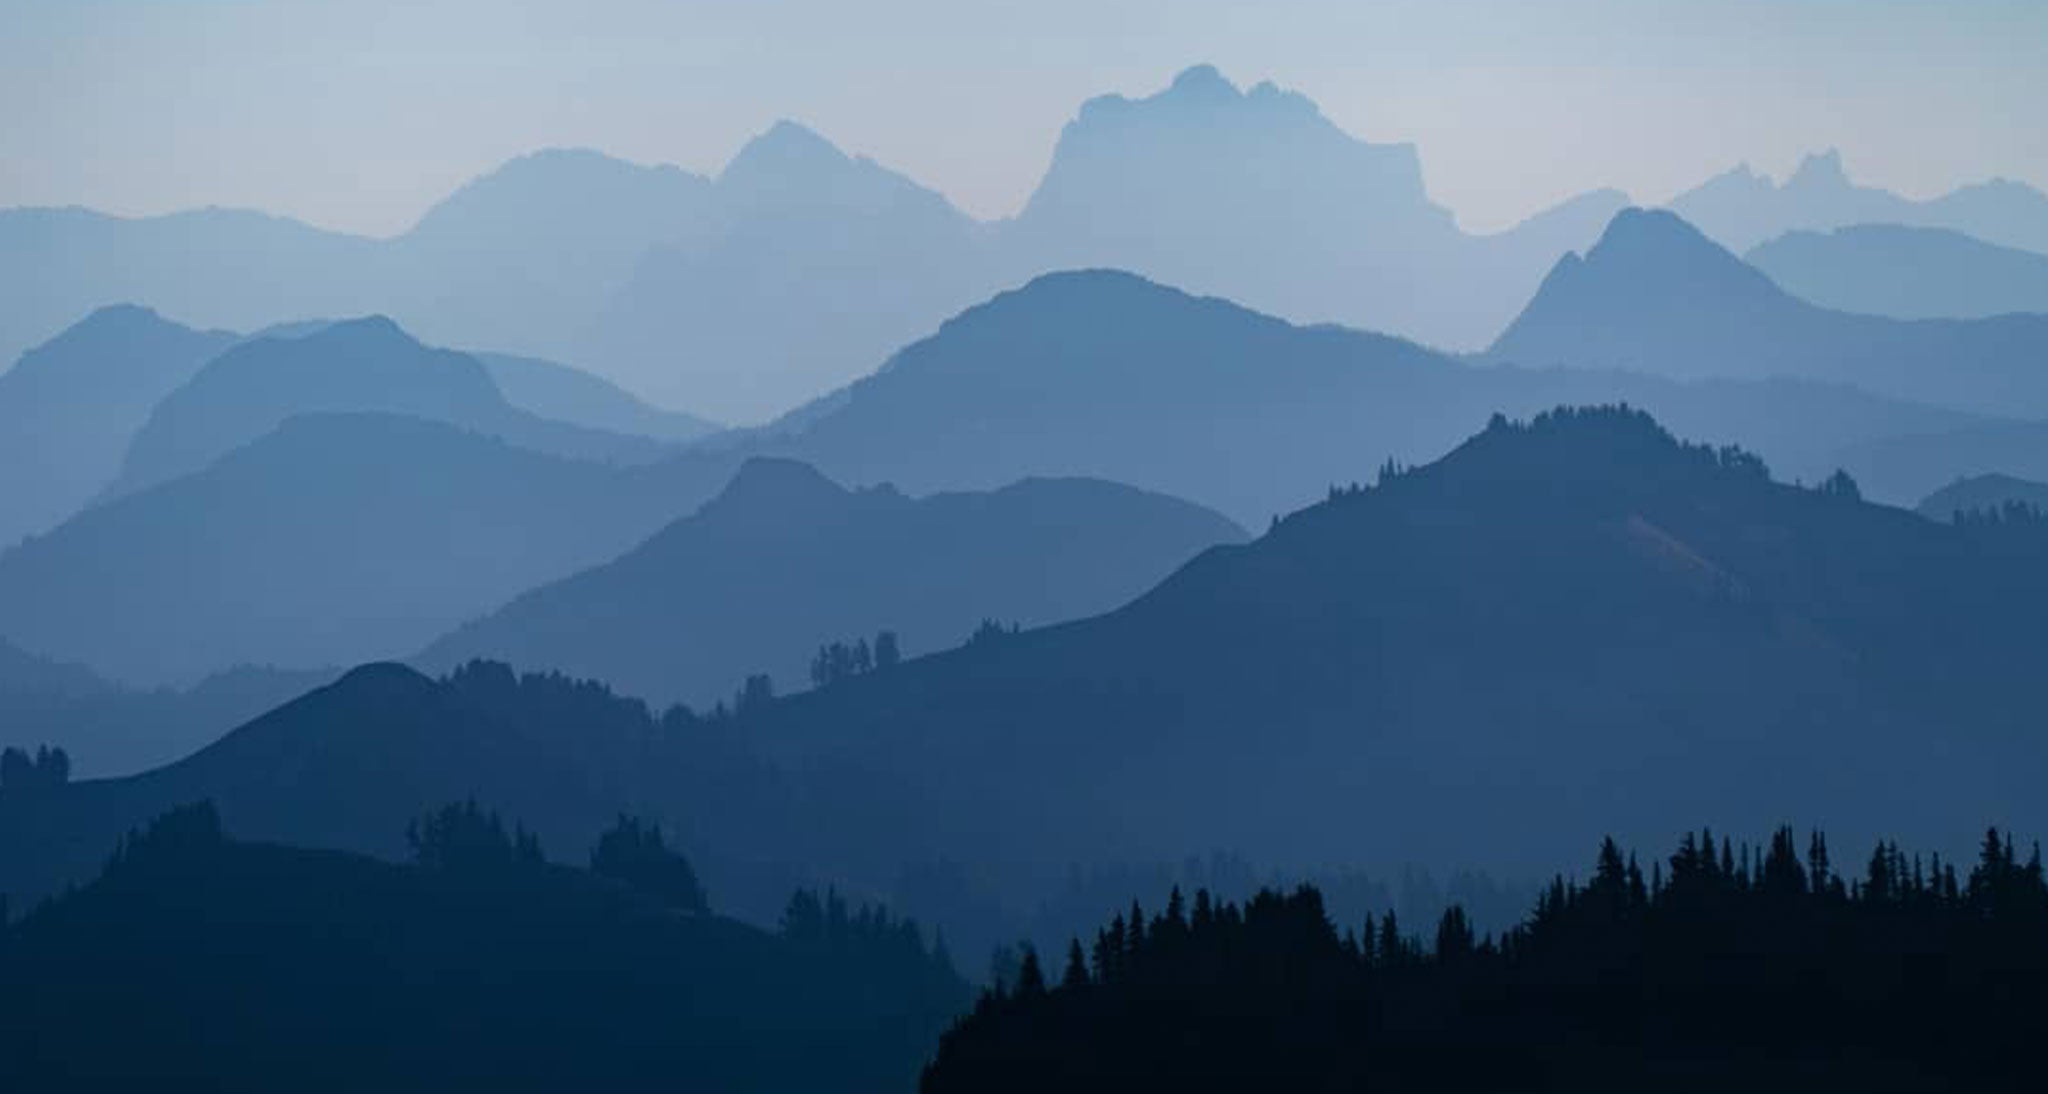 Blue-ish hued mountain ranges